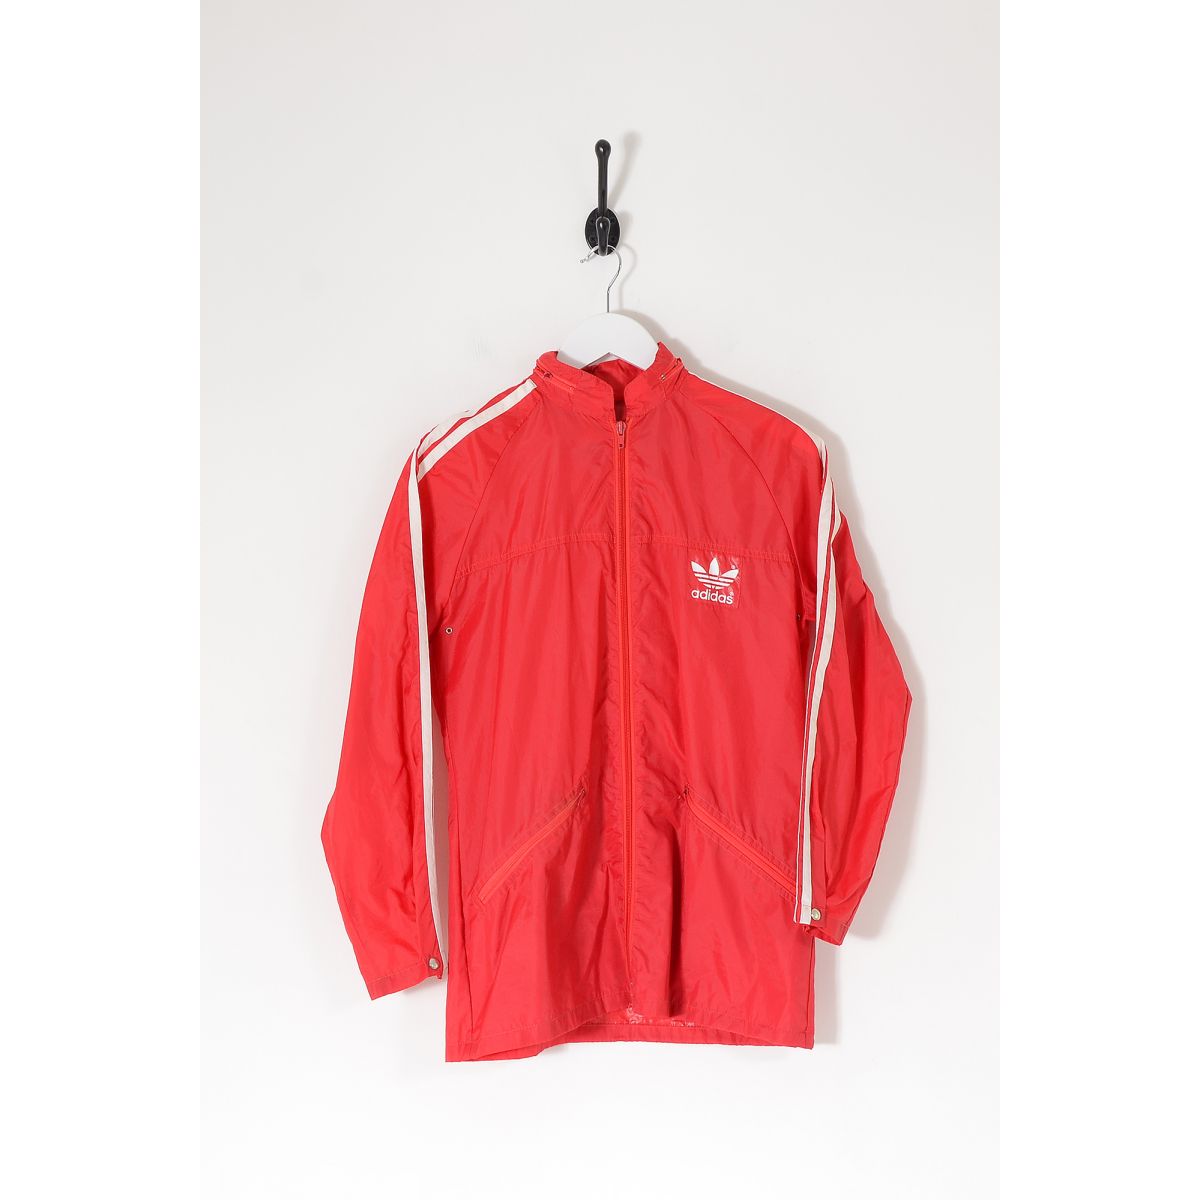 Vintage ADIDAS Lightweight Zip Up Jacket Red Medium